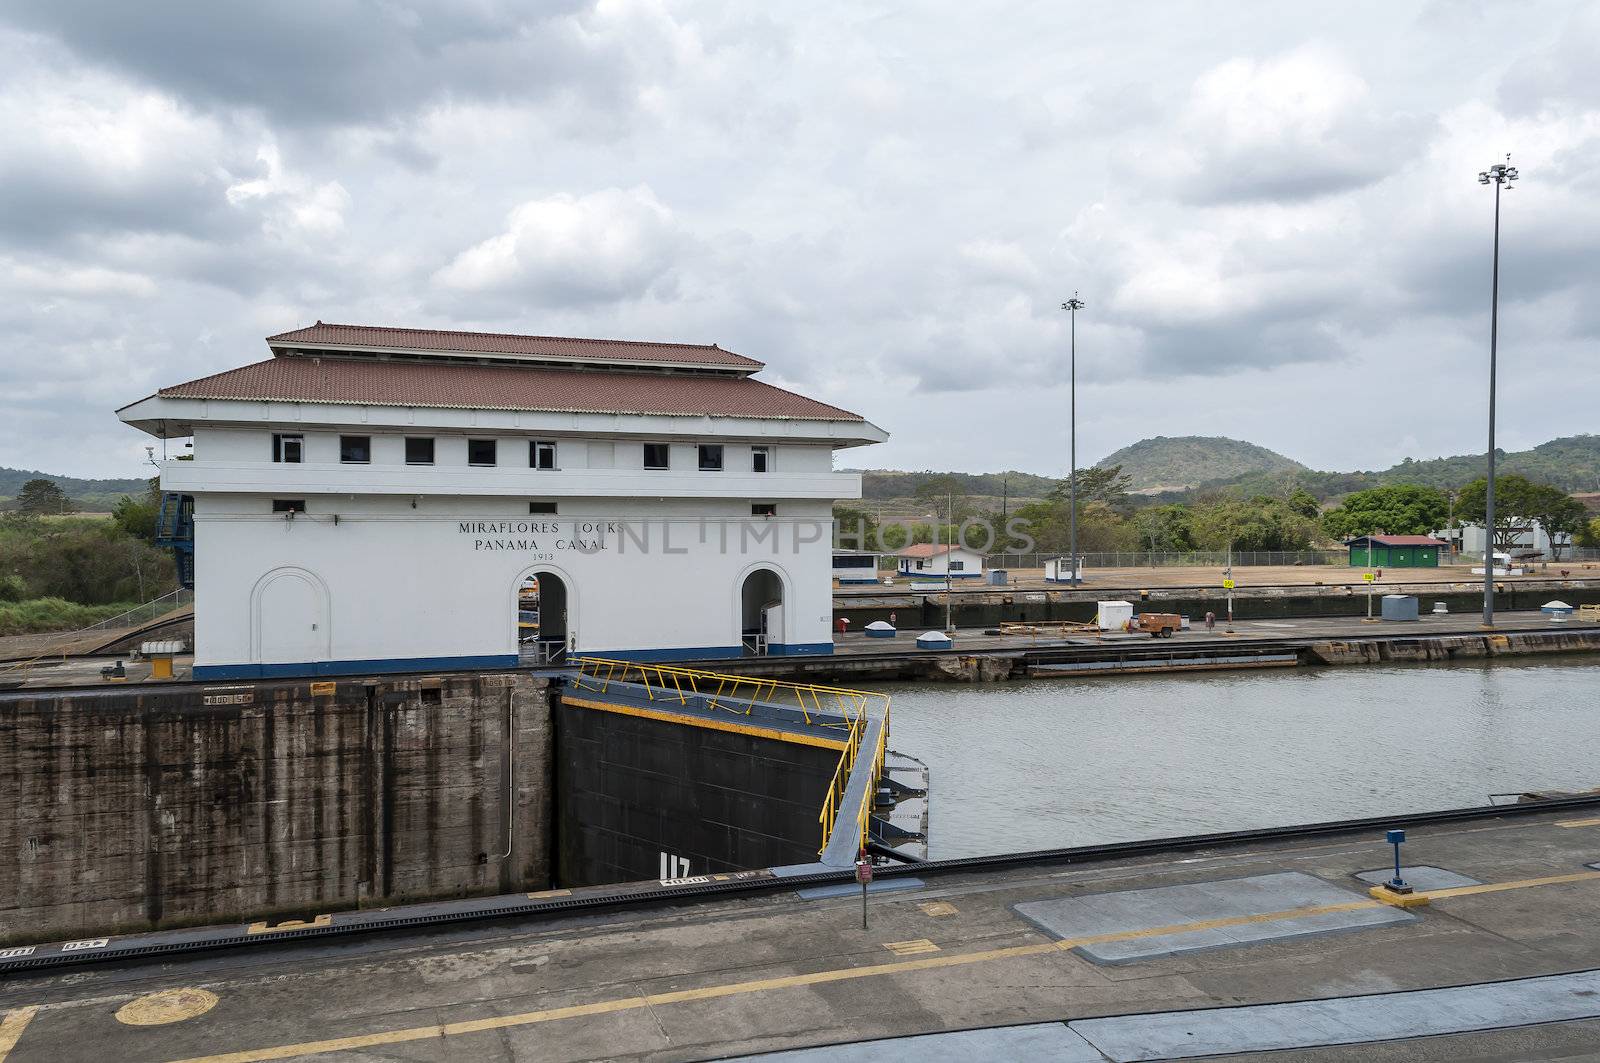 The Miraflores locks at the Panama Canal, in Panama.